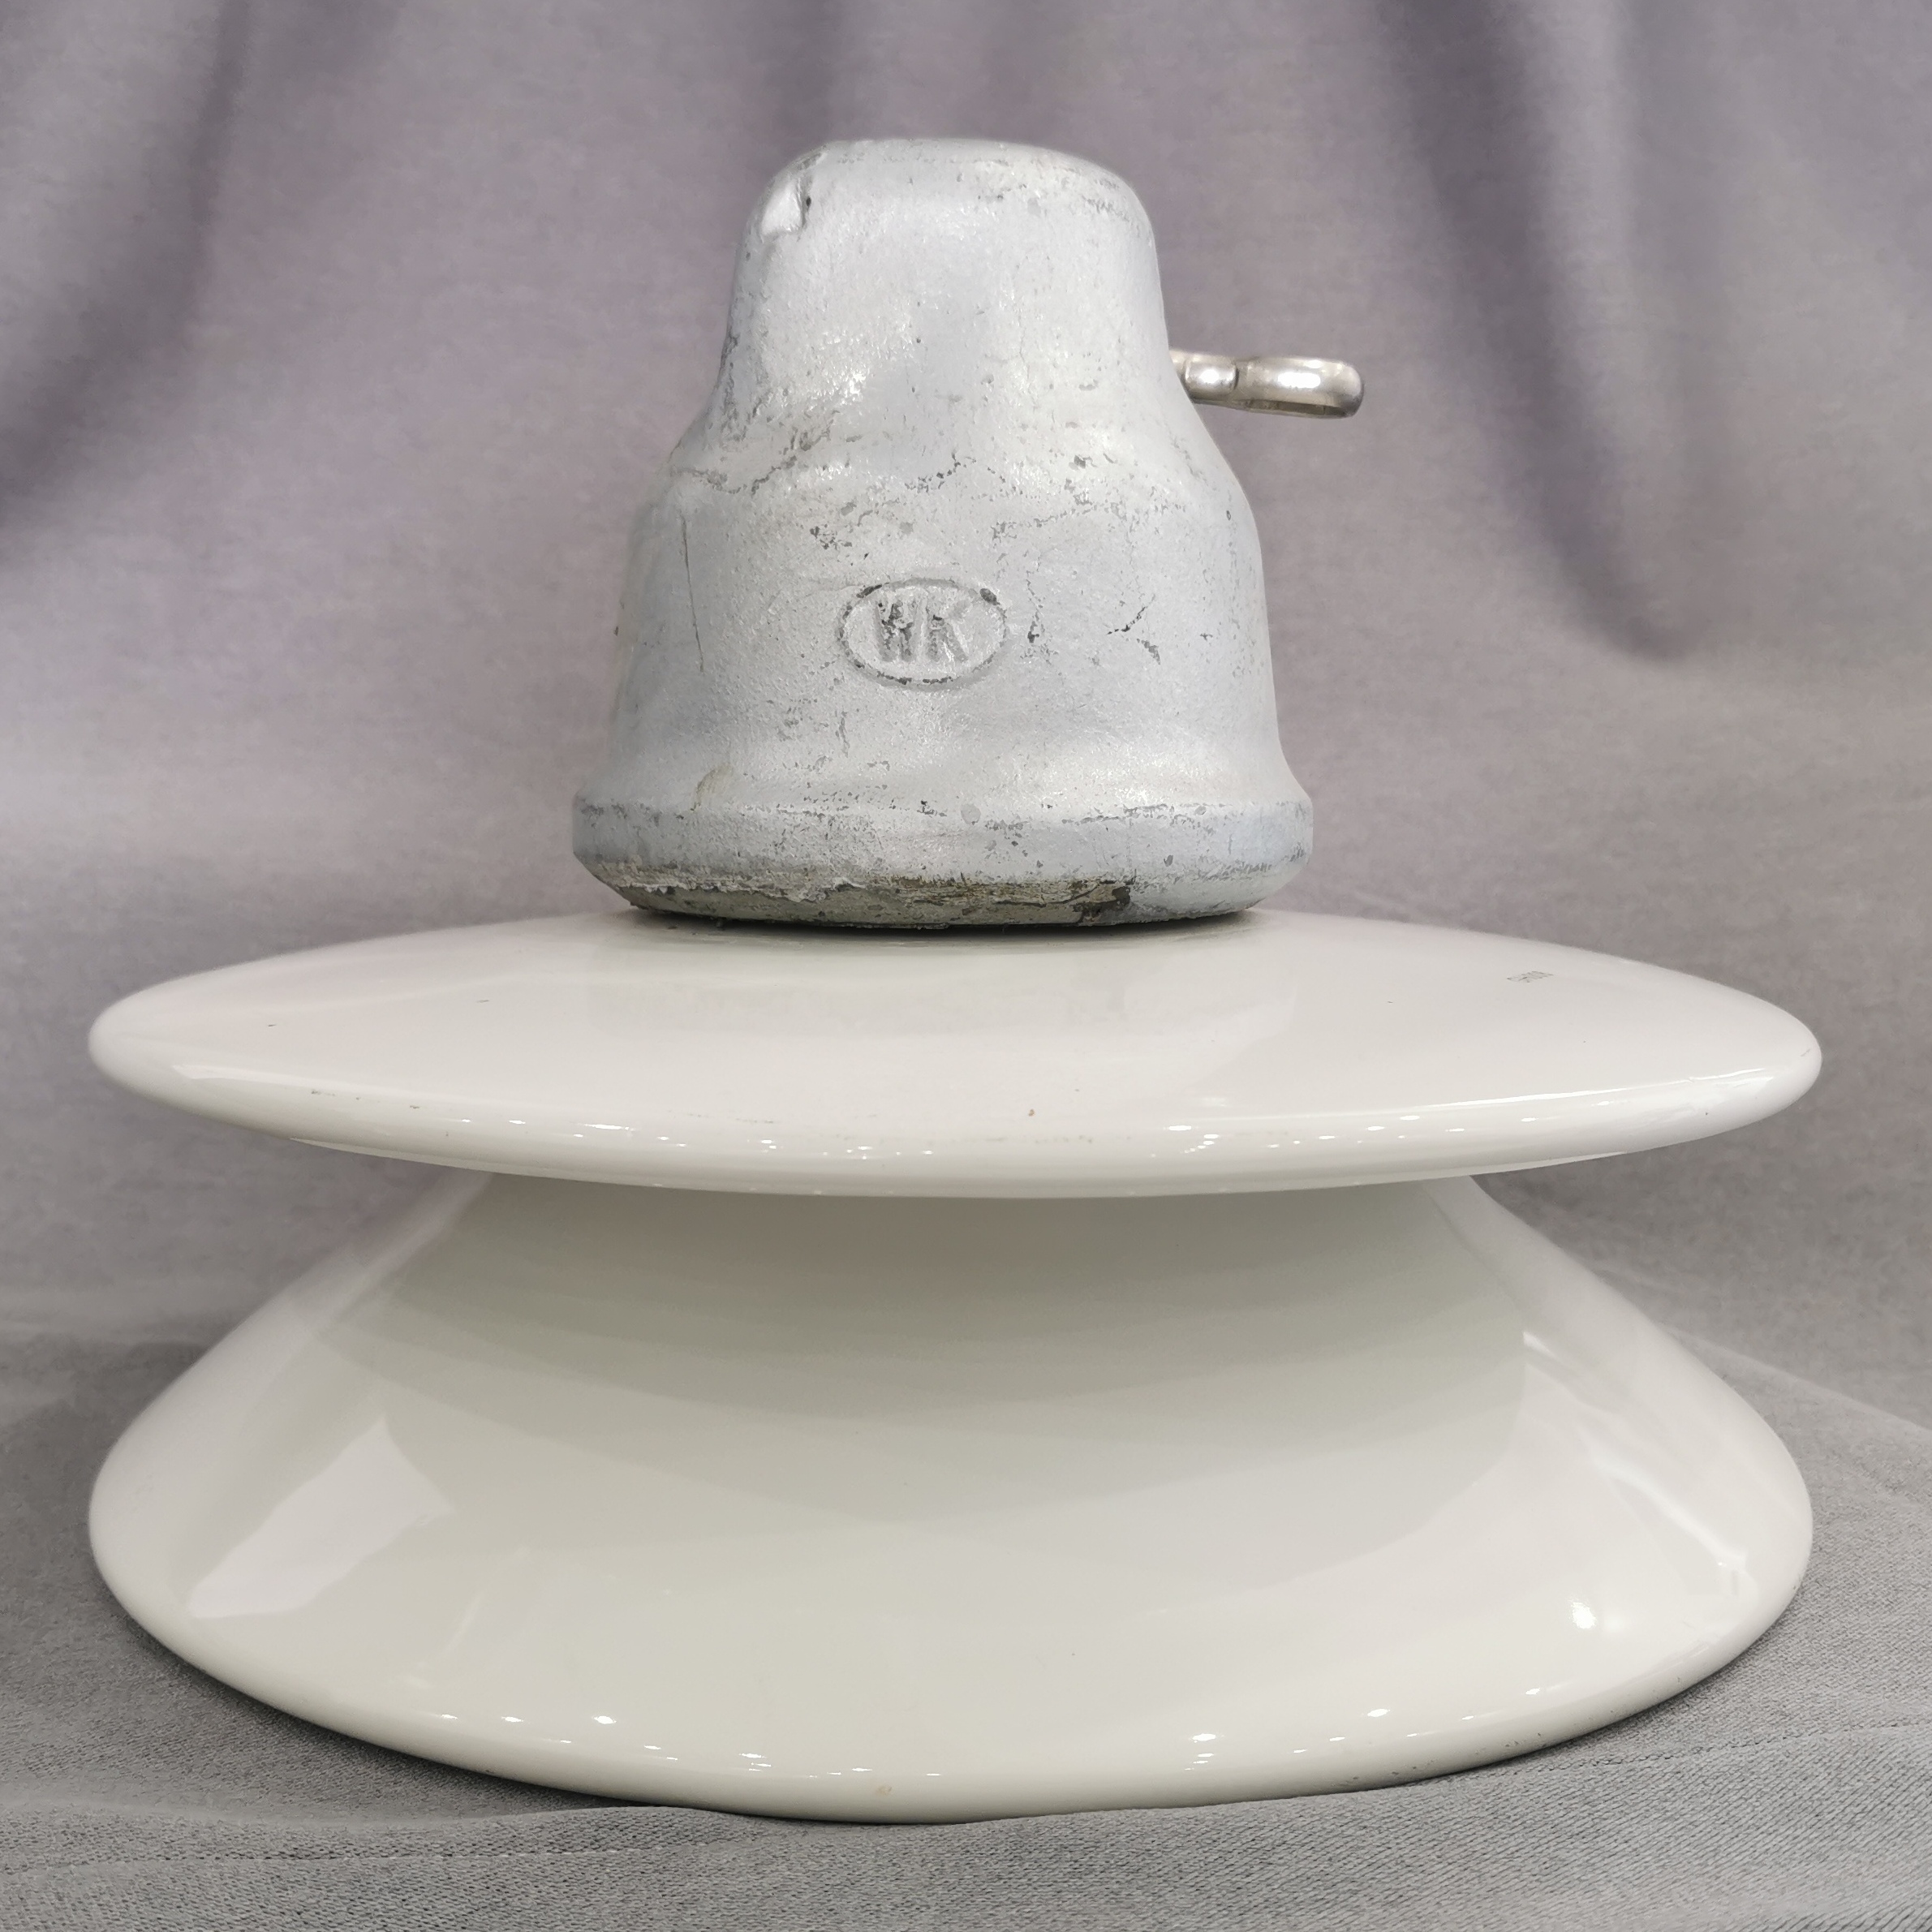 420 KN DC ዲስክ ማንጠልጠያ porcelain insulator